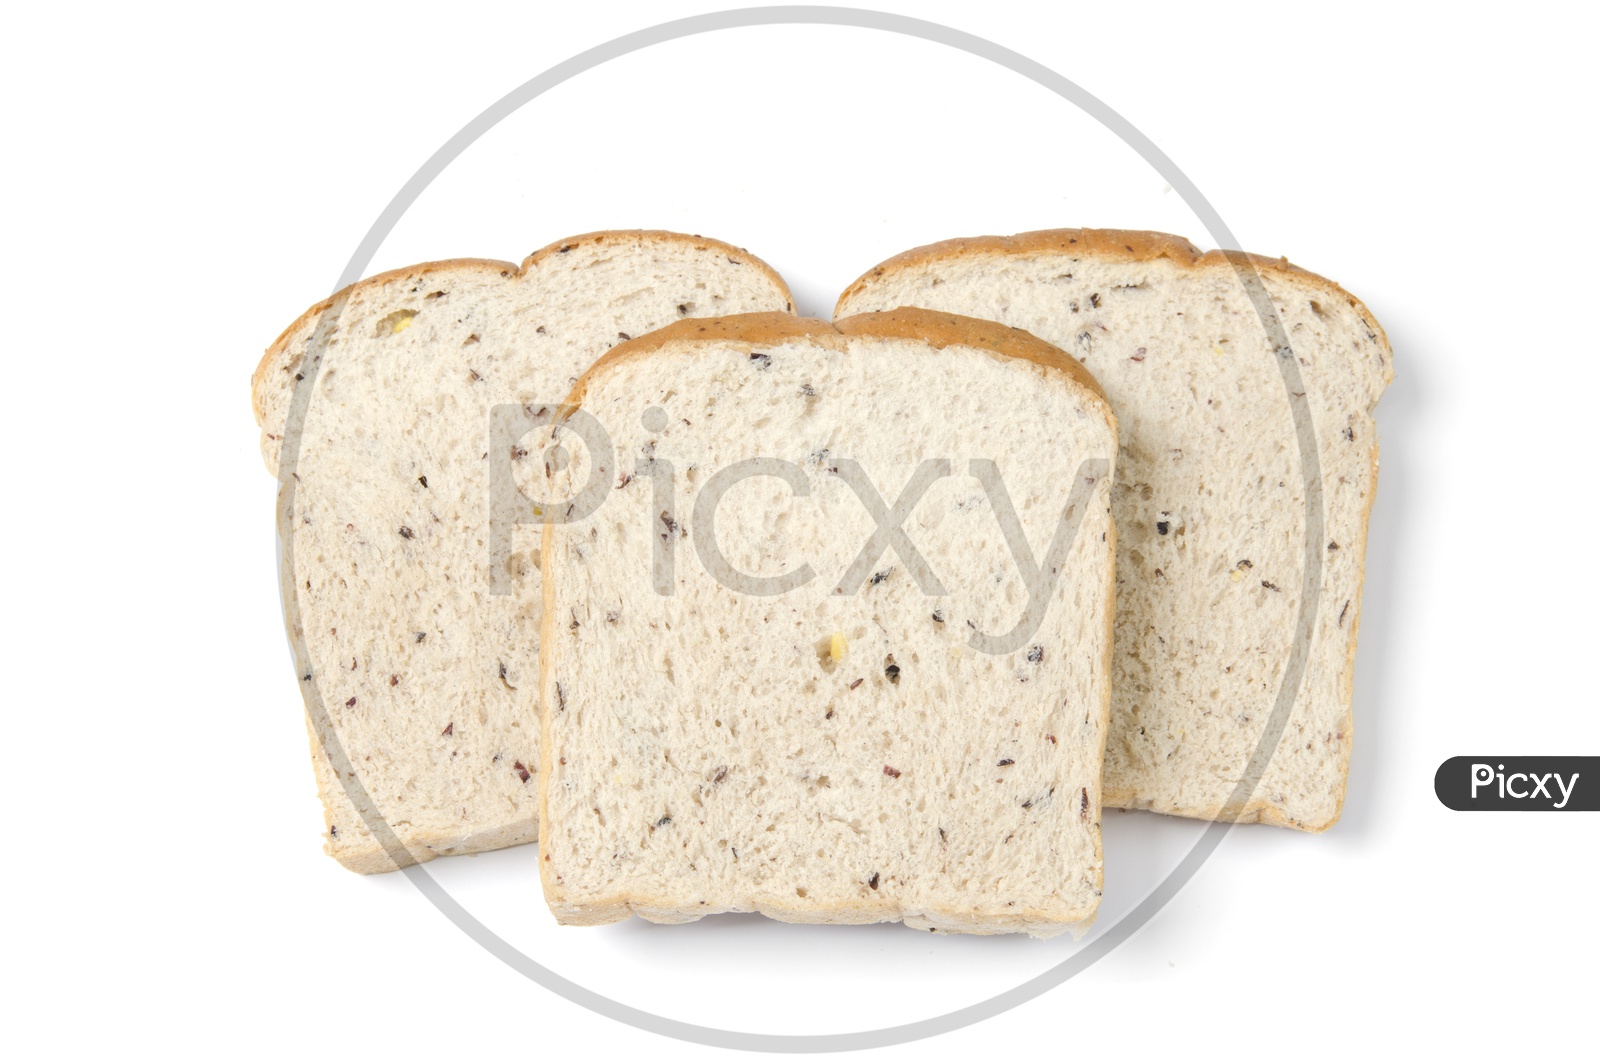 Bread slices